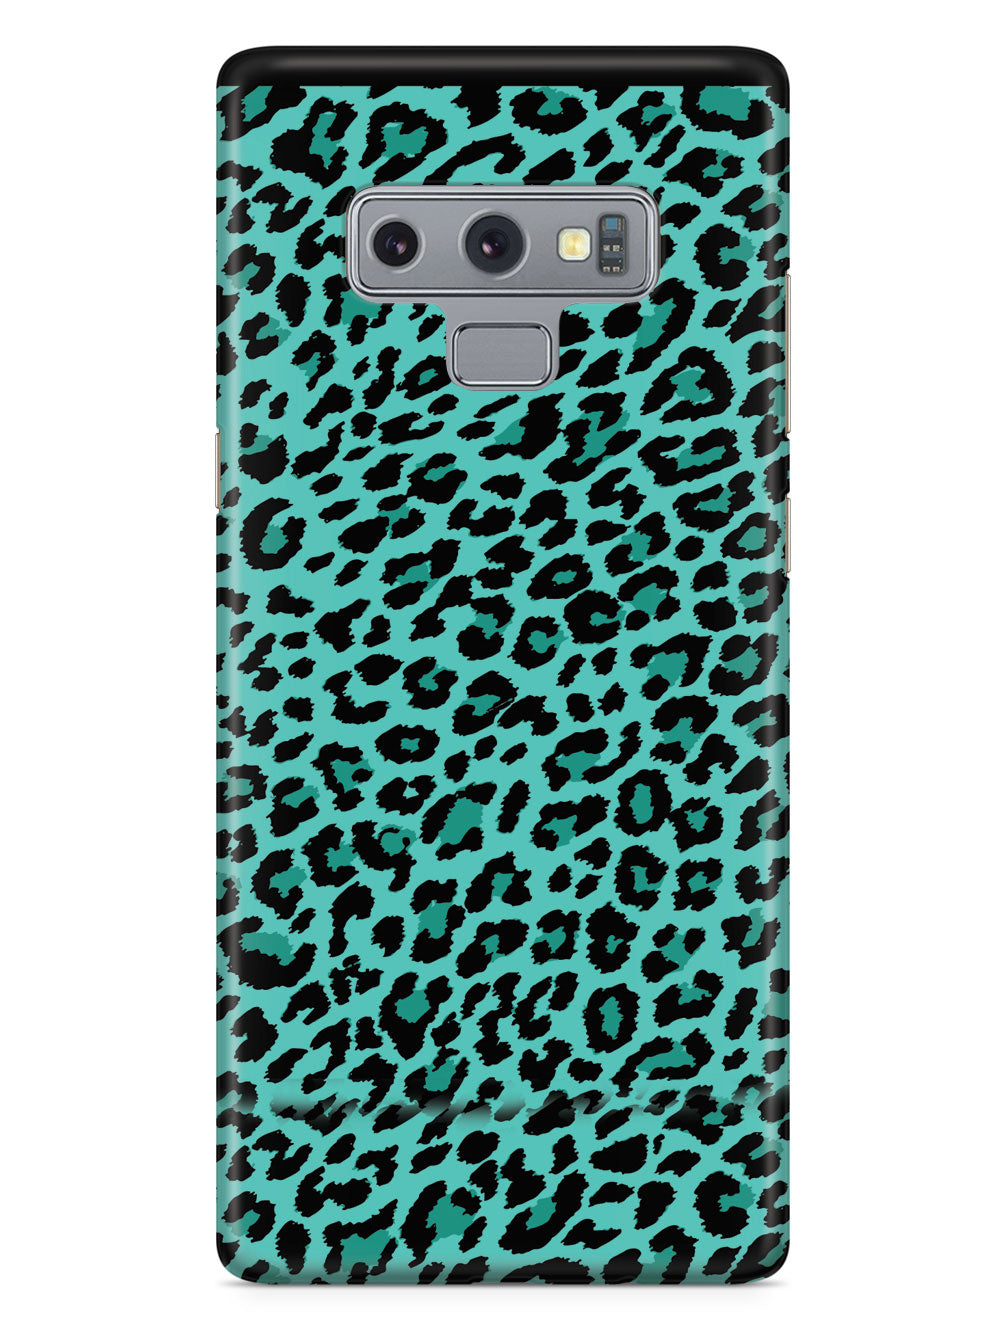 Teal Leopard Print Pattern Case